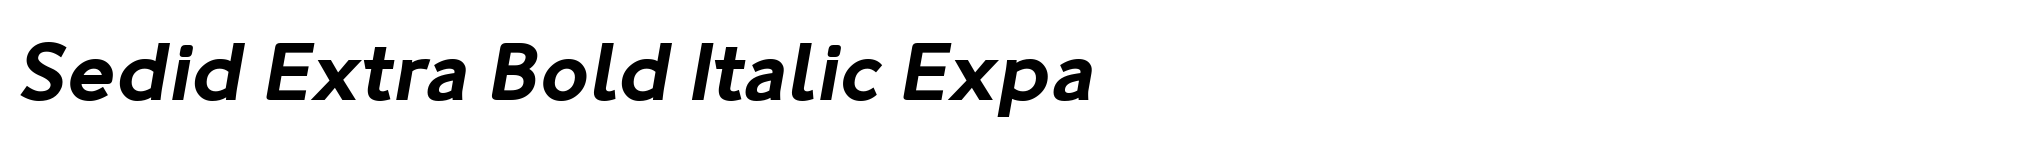 Sedid Extra Bold Italic Expa image